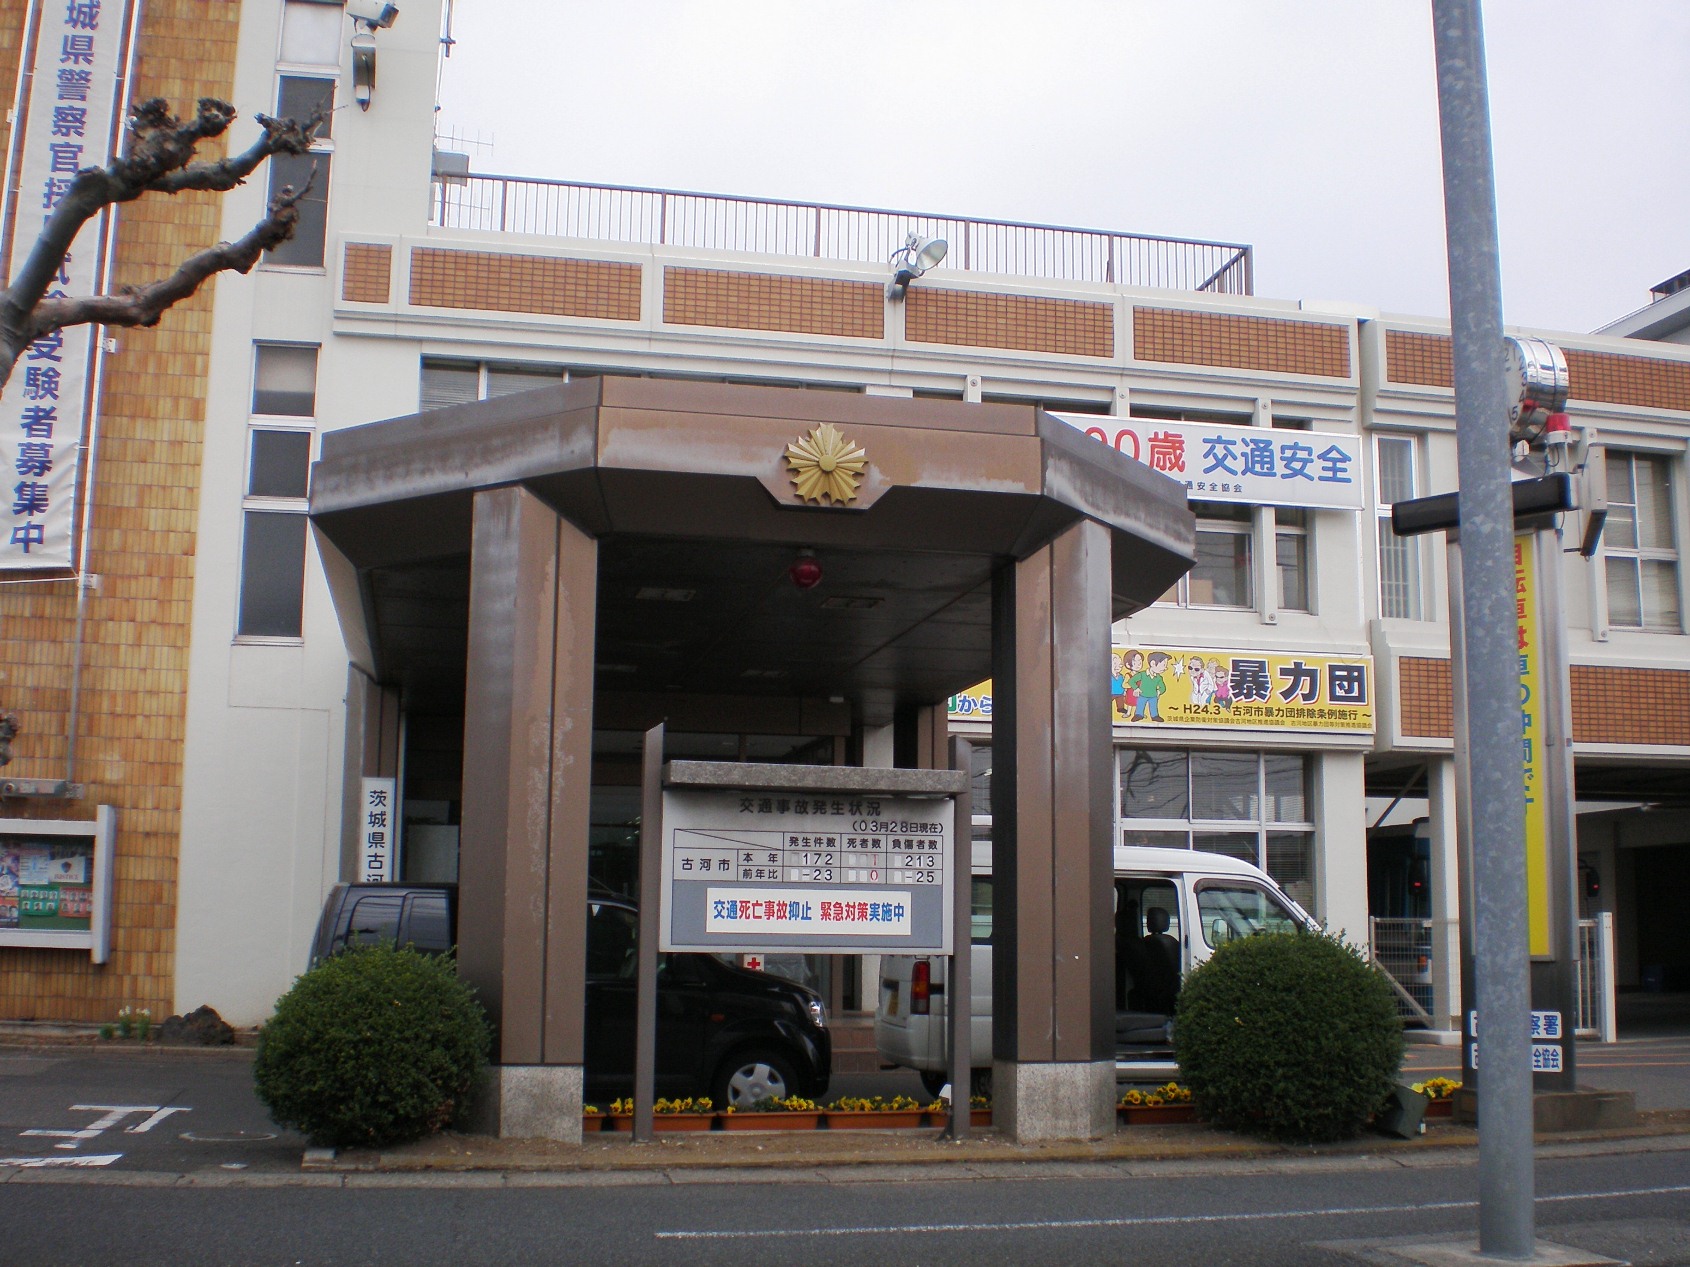 Police station ・ Police box. Furukawa police station (police station ・ Until alternating) 830m